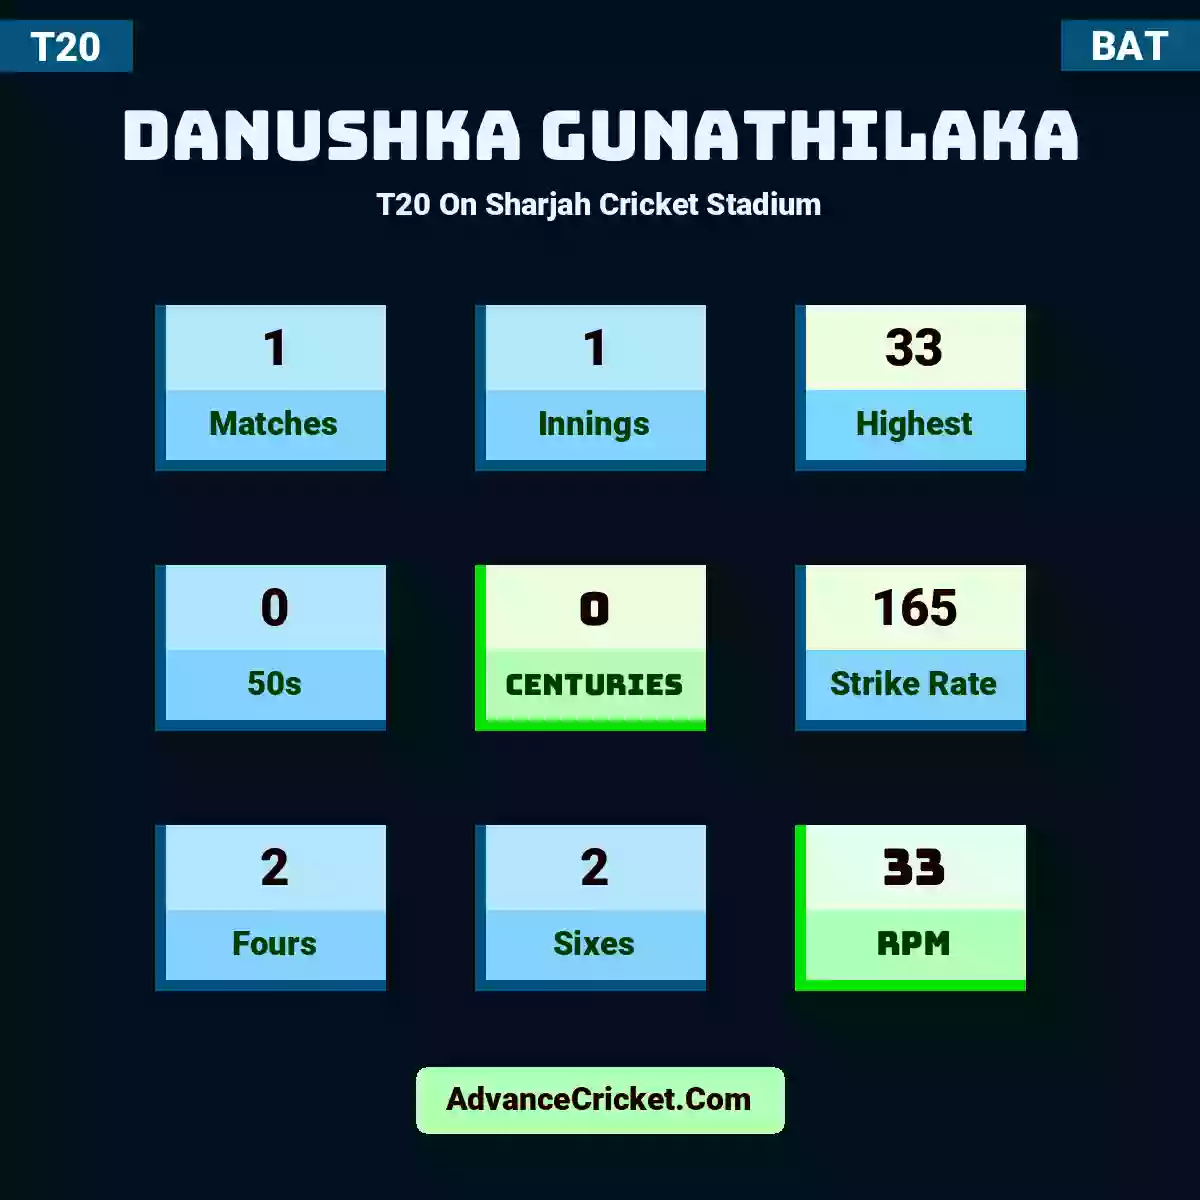 Danushka Gunathilaka T20  On Sharjah Cricket Stadium, Danushka Gunathilaka played 1 matches, scored 33 runs as highest, 0 half-centuries, and 0 centuries, with a strike rate of 165. D.Gunathilaka hit 2 fours and 2 sixes, with an RPM of 33.